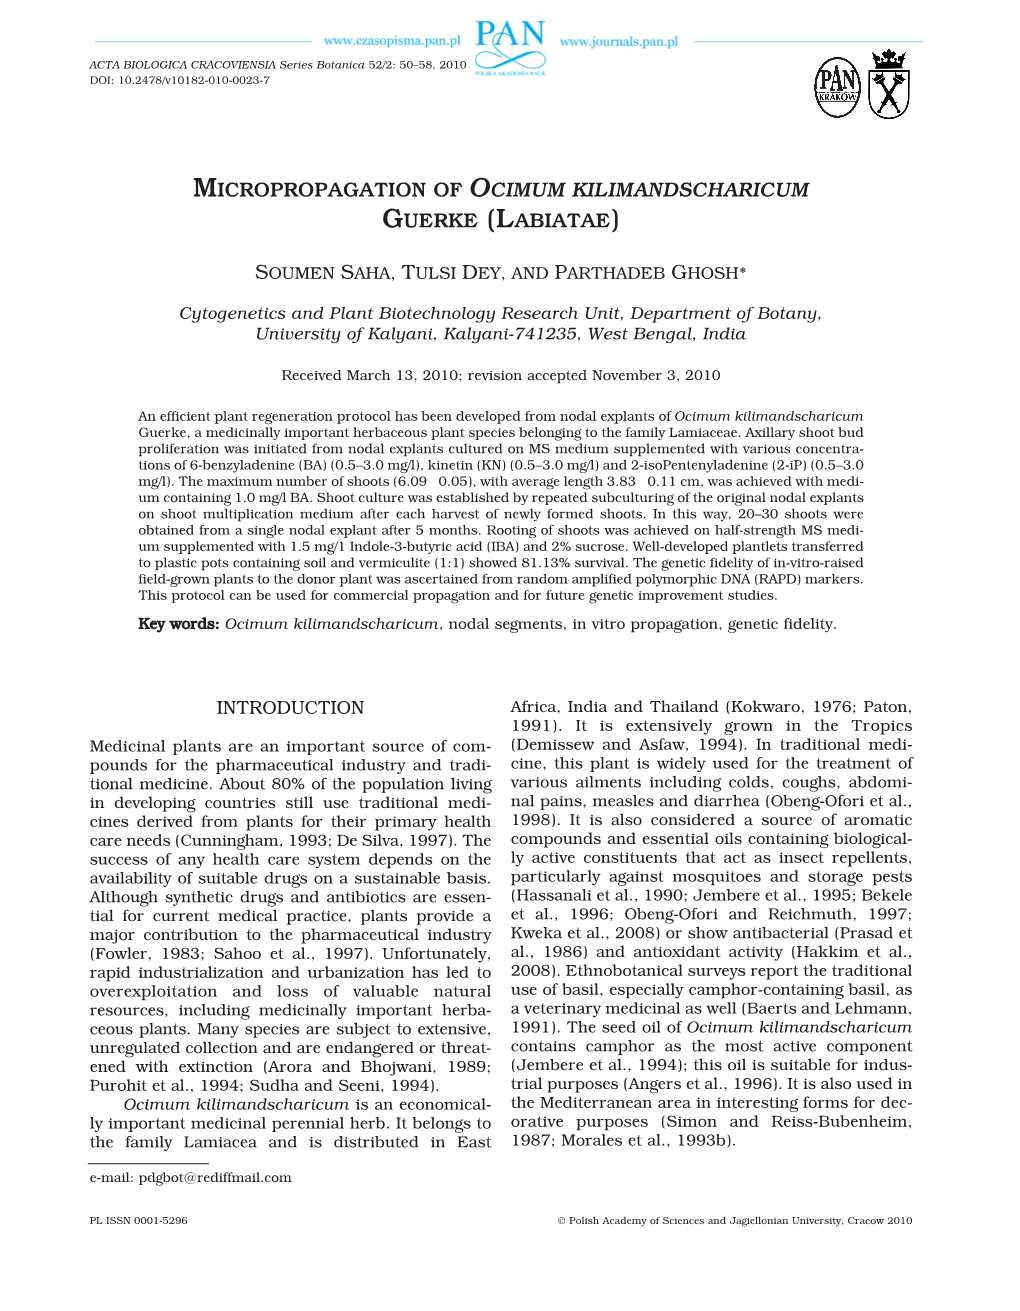 Micropropagation of Ocimum Kilimandscharicum Guerke (Labiatae)